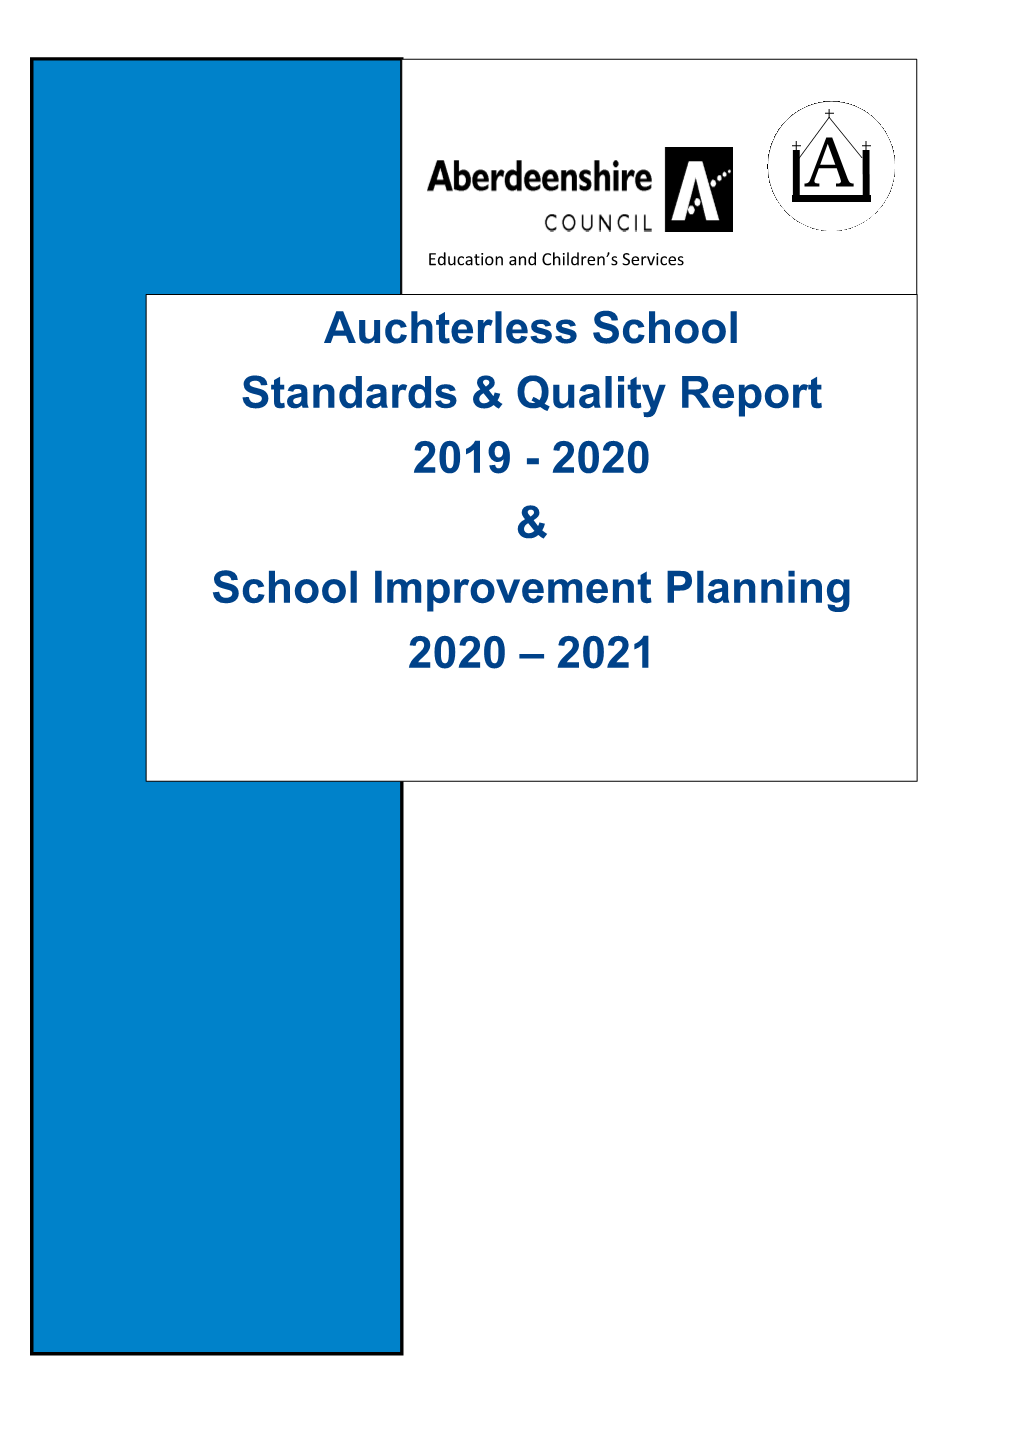 Auchterless School Standards & Quality Report 2019